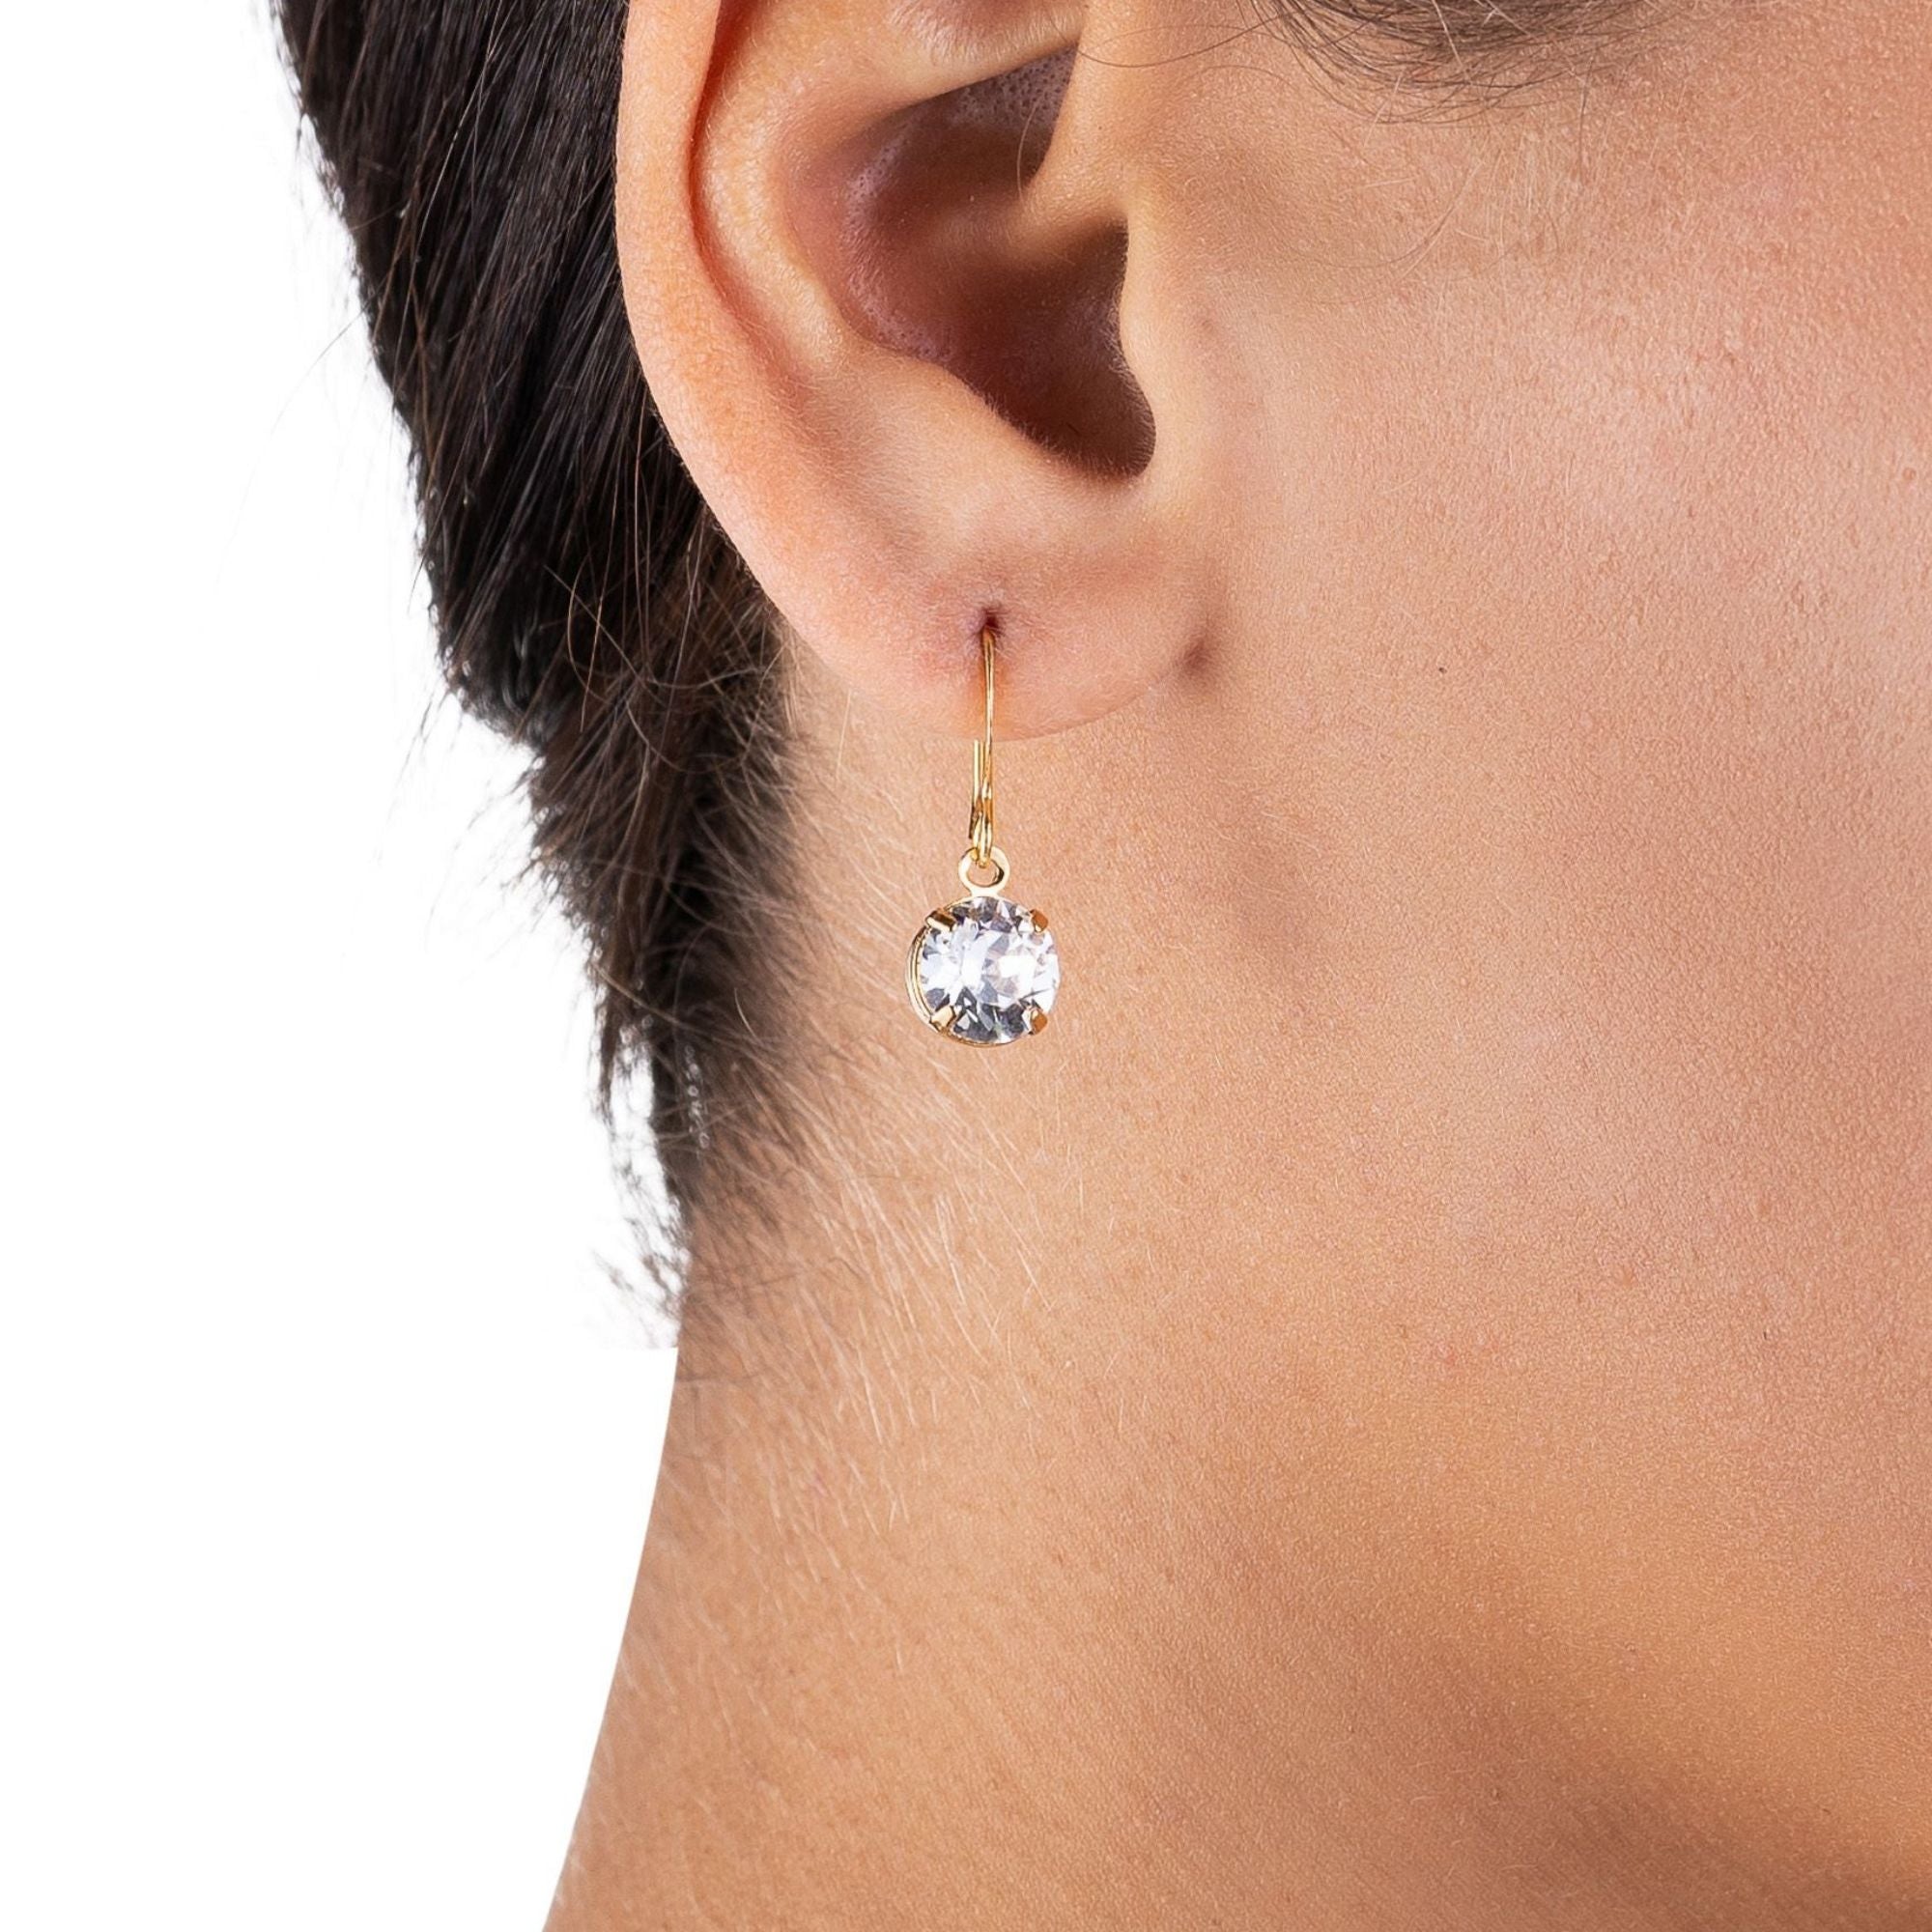 Aquamarine Earrings Swarovski Crystal, March Birthstone, Aquamarine  Jewelry, Aquamarine Drop Dangle Earrings, Blue Teardrop Earrings - Etsy |  Aquamarine earrings, Aquamarine jewelry, Champagne crystal earrings